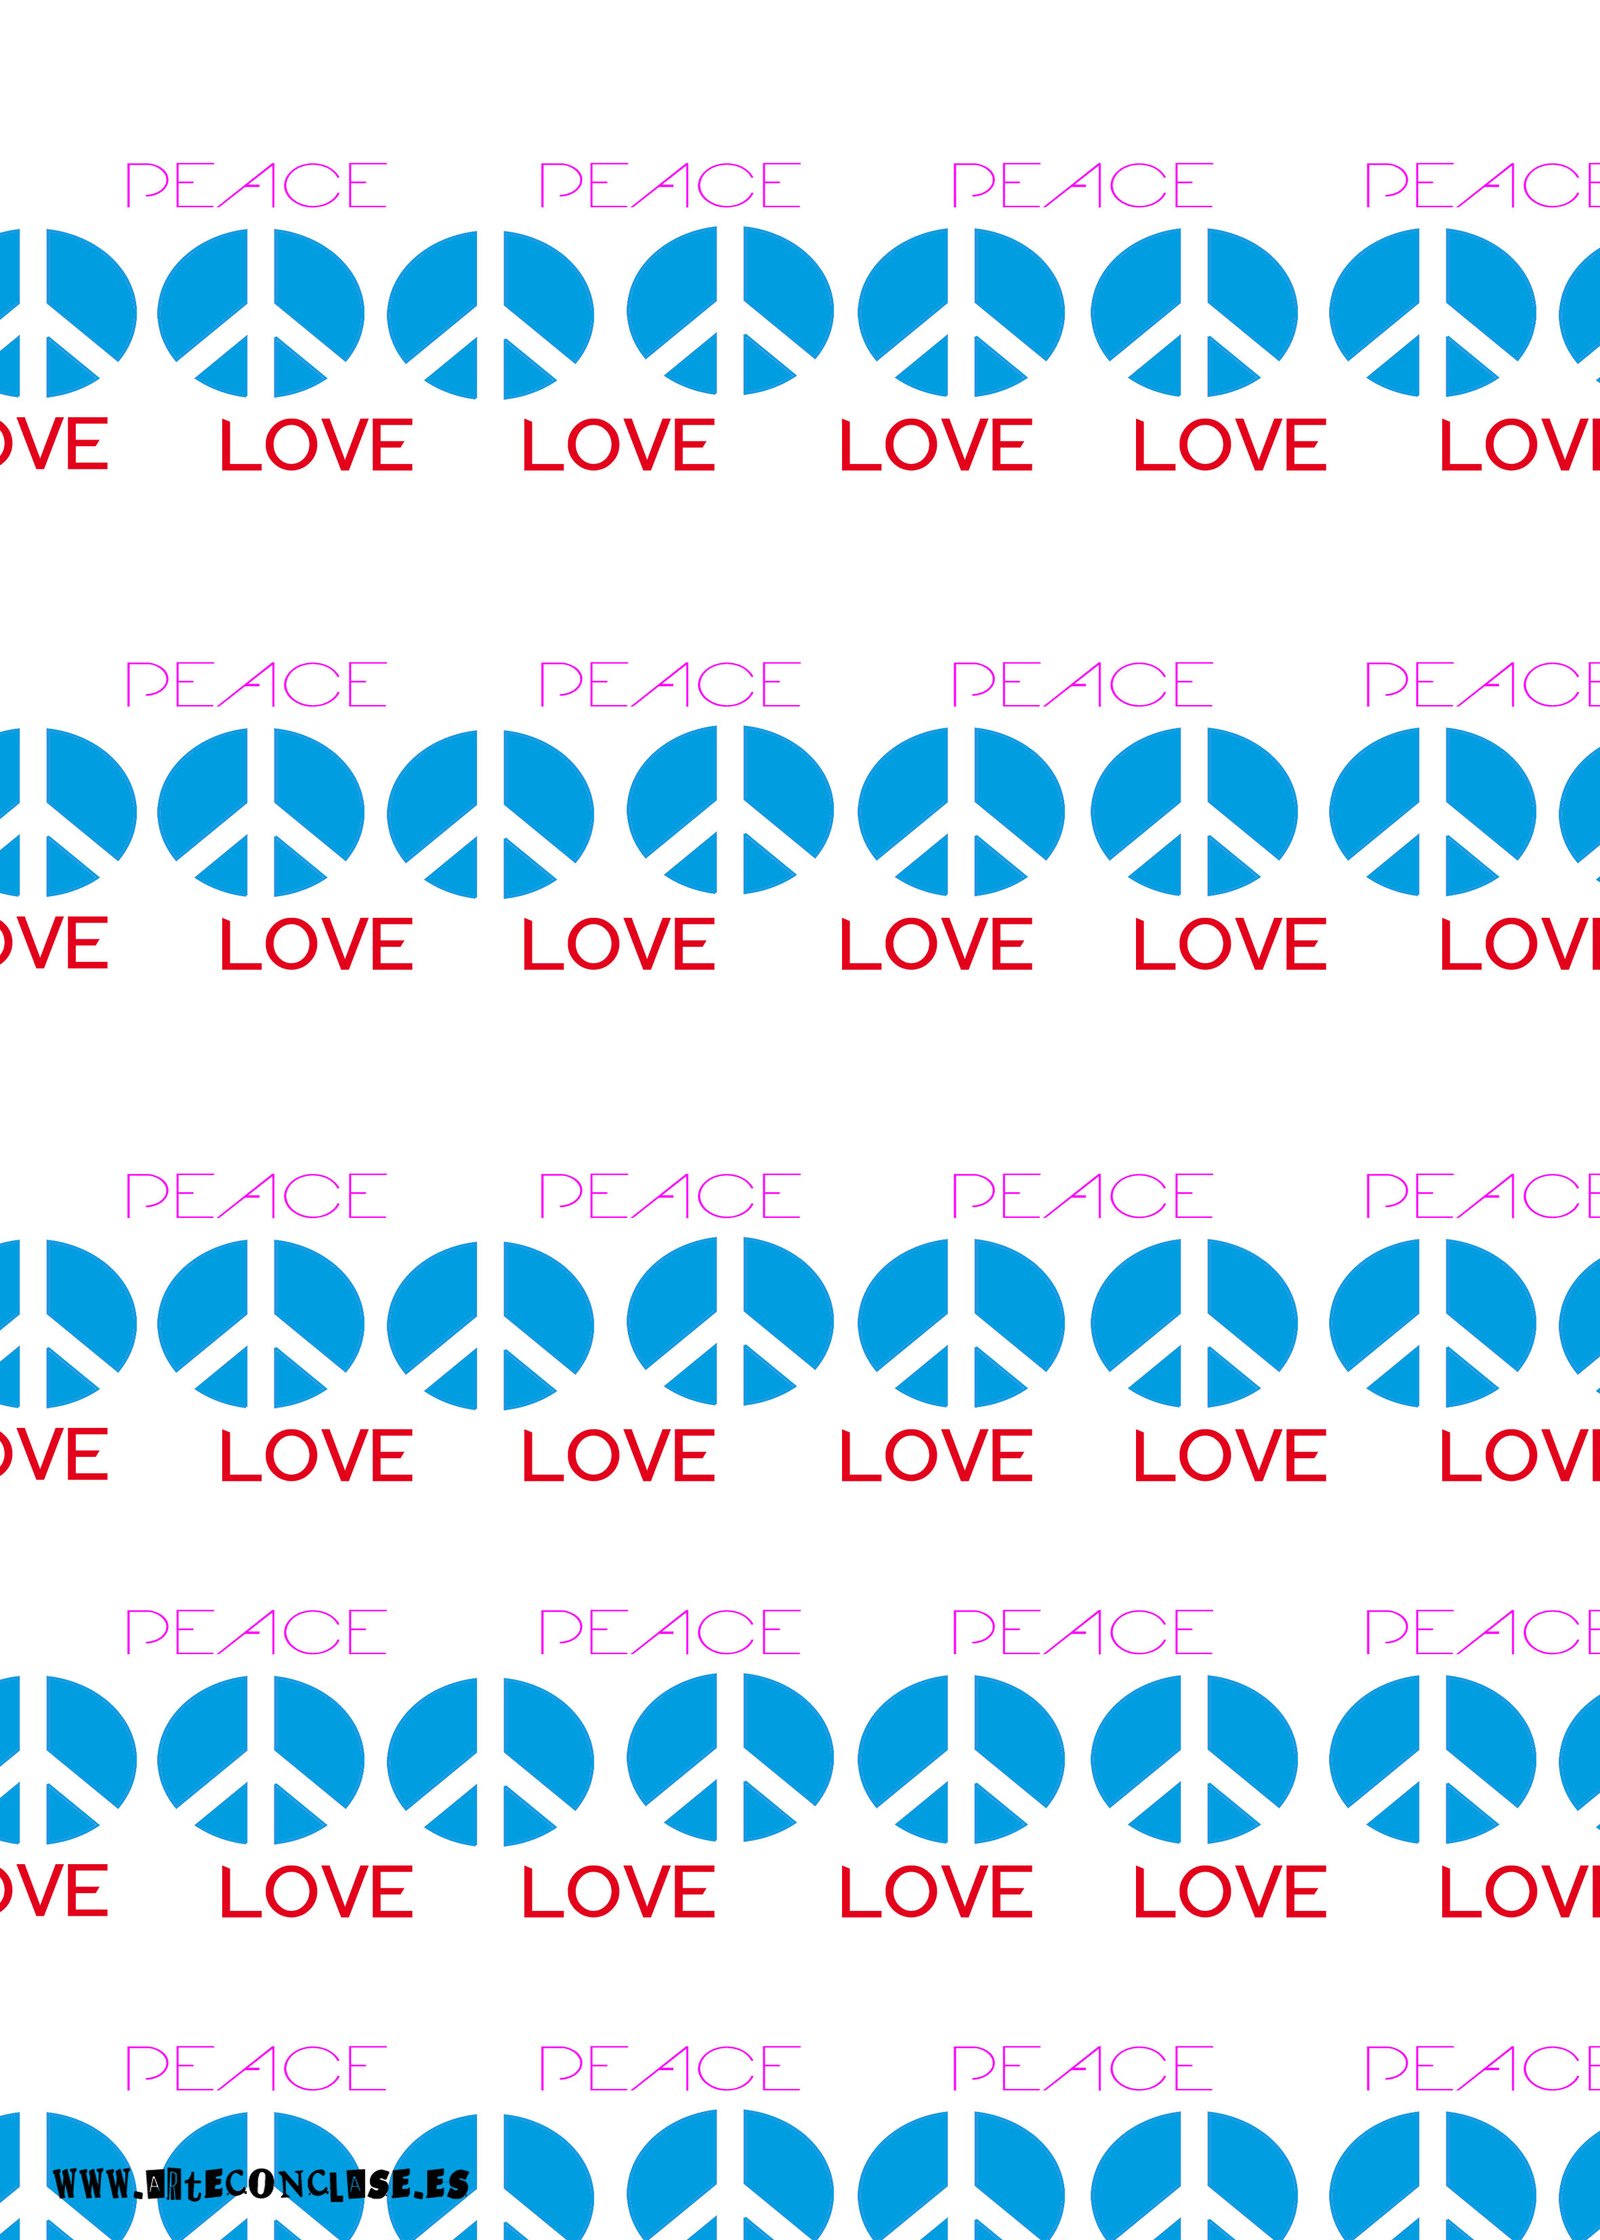 Love & Peace 2 papel decorativo dia de la paz Arte con clase manualidades tanto en casa como en clase